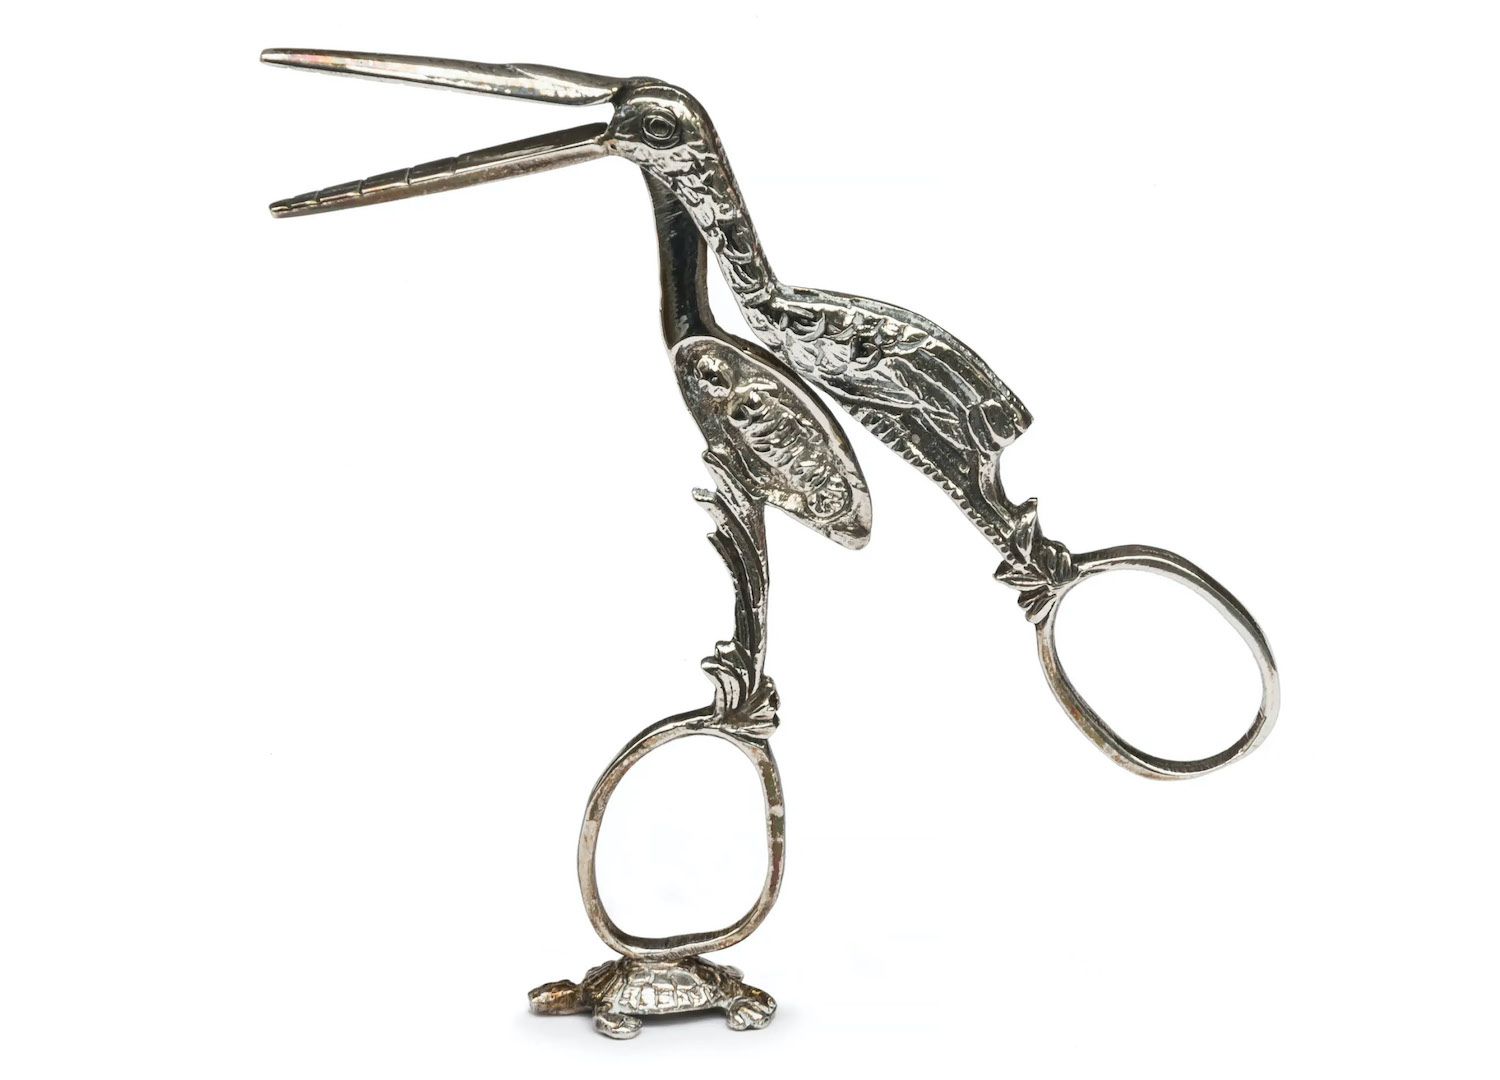 Retro Crane Mouth Stork Scissors Bird Cross Stitch Antique Vintage